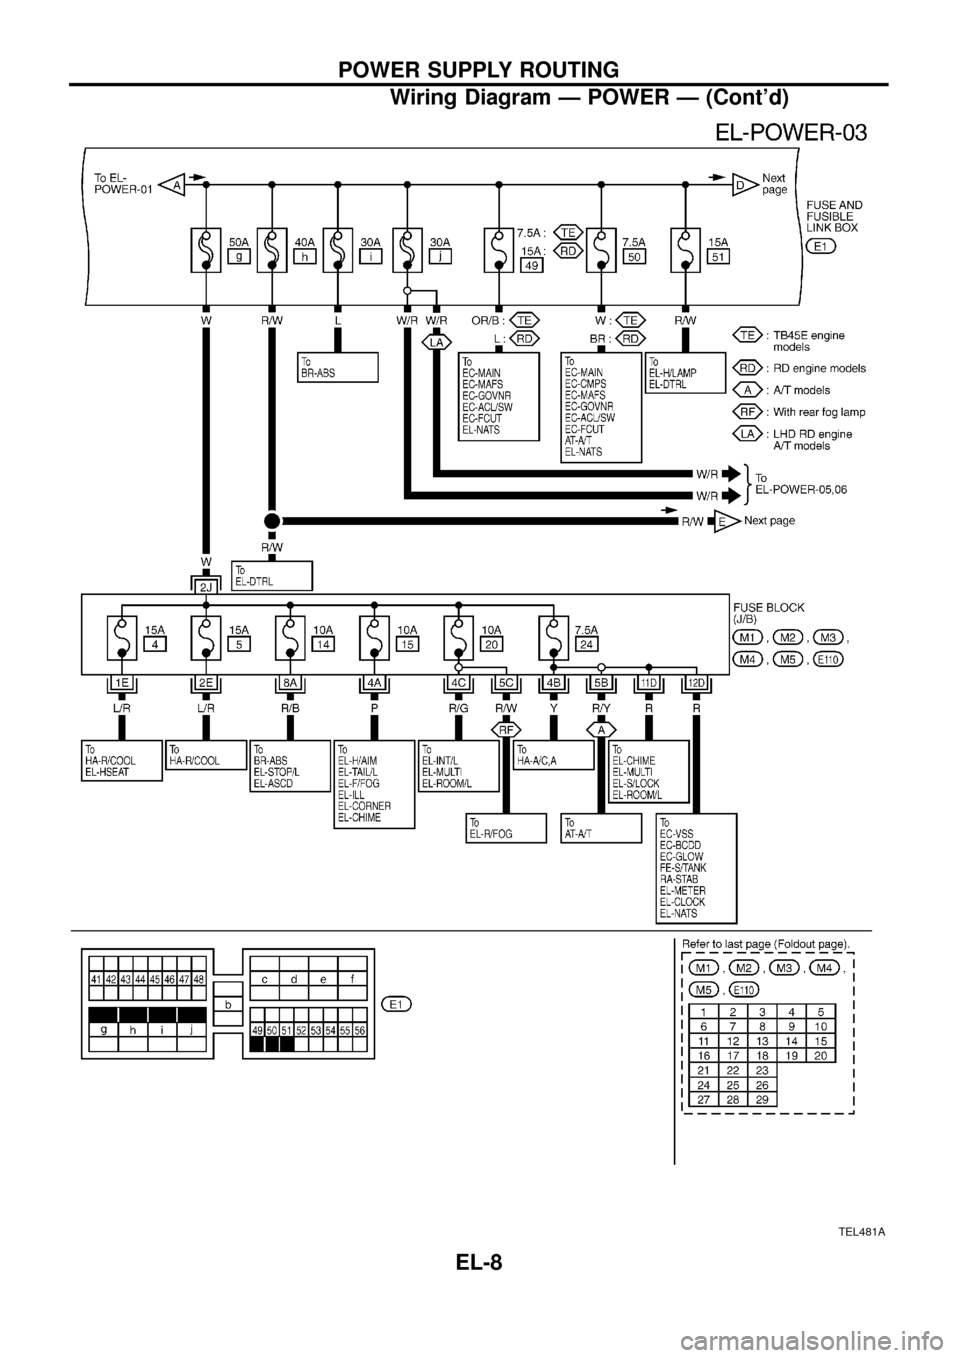 NISSAN PATROL 1998 Y61 / 5.G Electrical System User Guide TEL481A
POWER SUPPLY ROUTING
Wiring Diagram Ð POWER Ð (Contd)
EL-8 